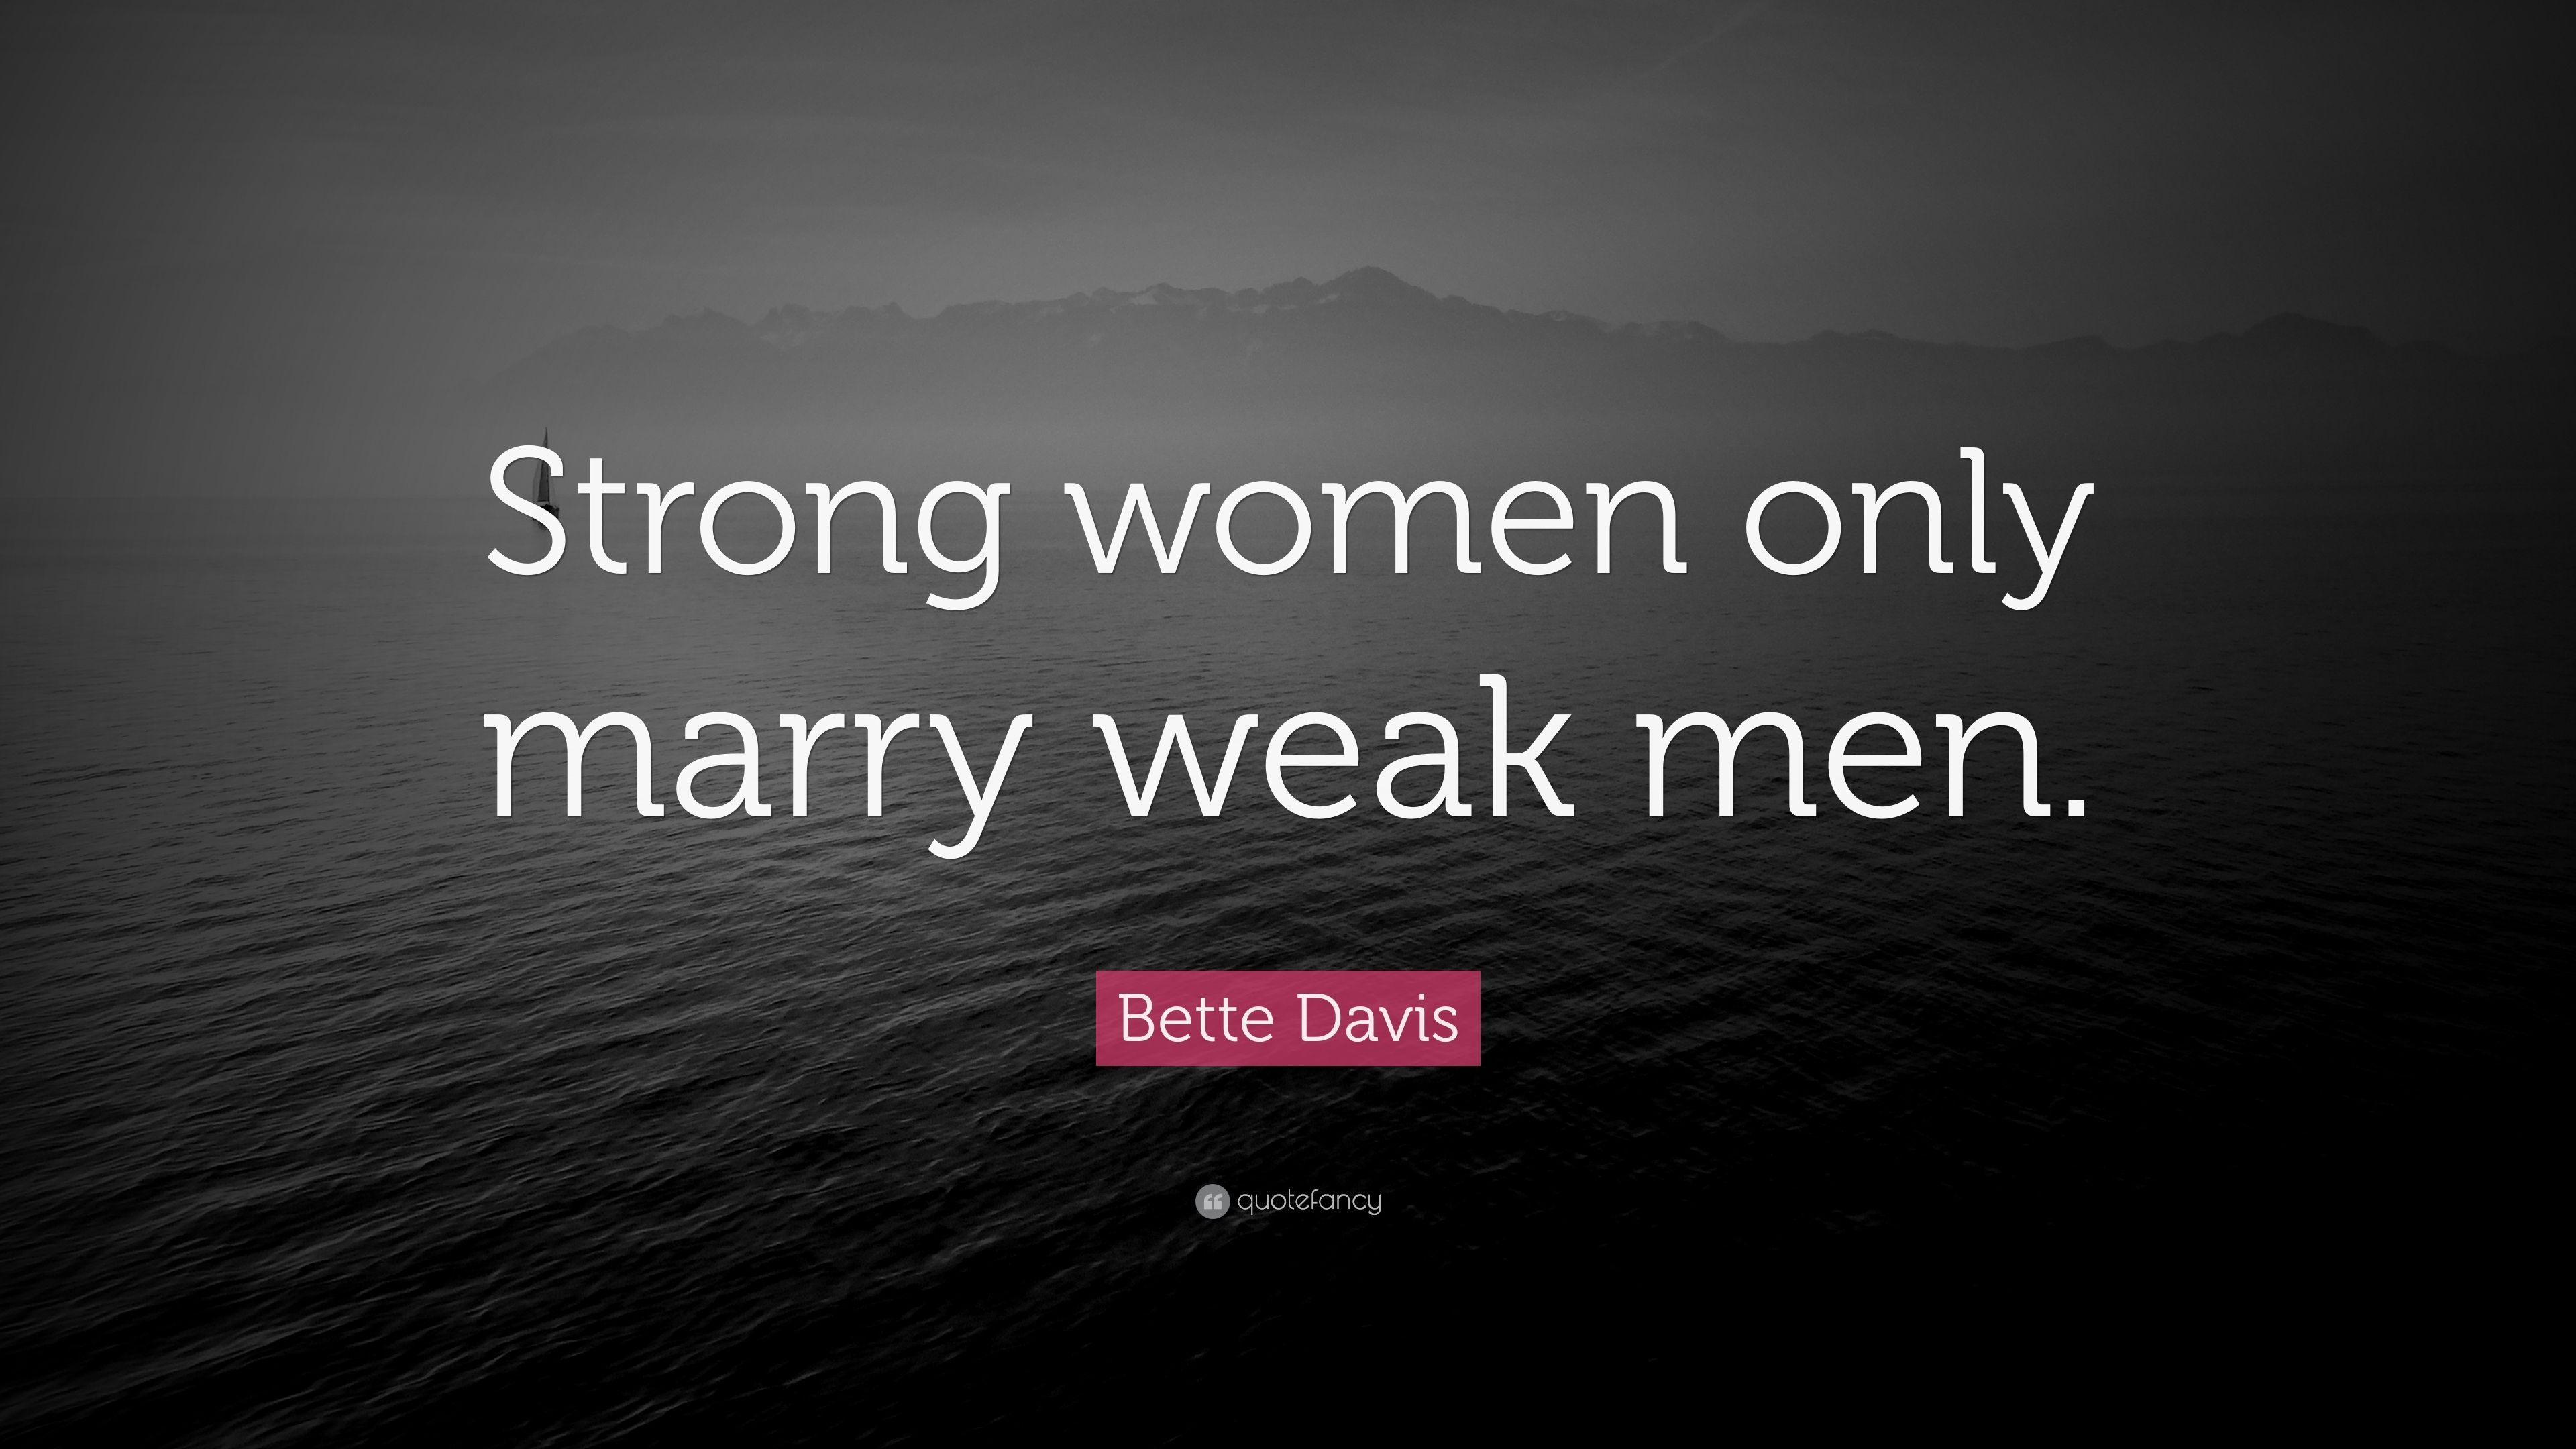 Bette Davis Quote: “Strong women only marry weak men.” (10 wallpaper)